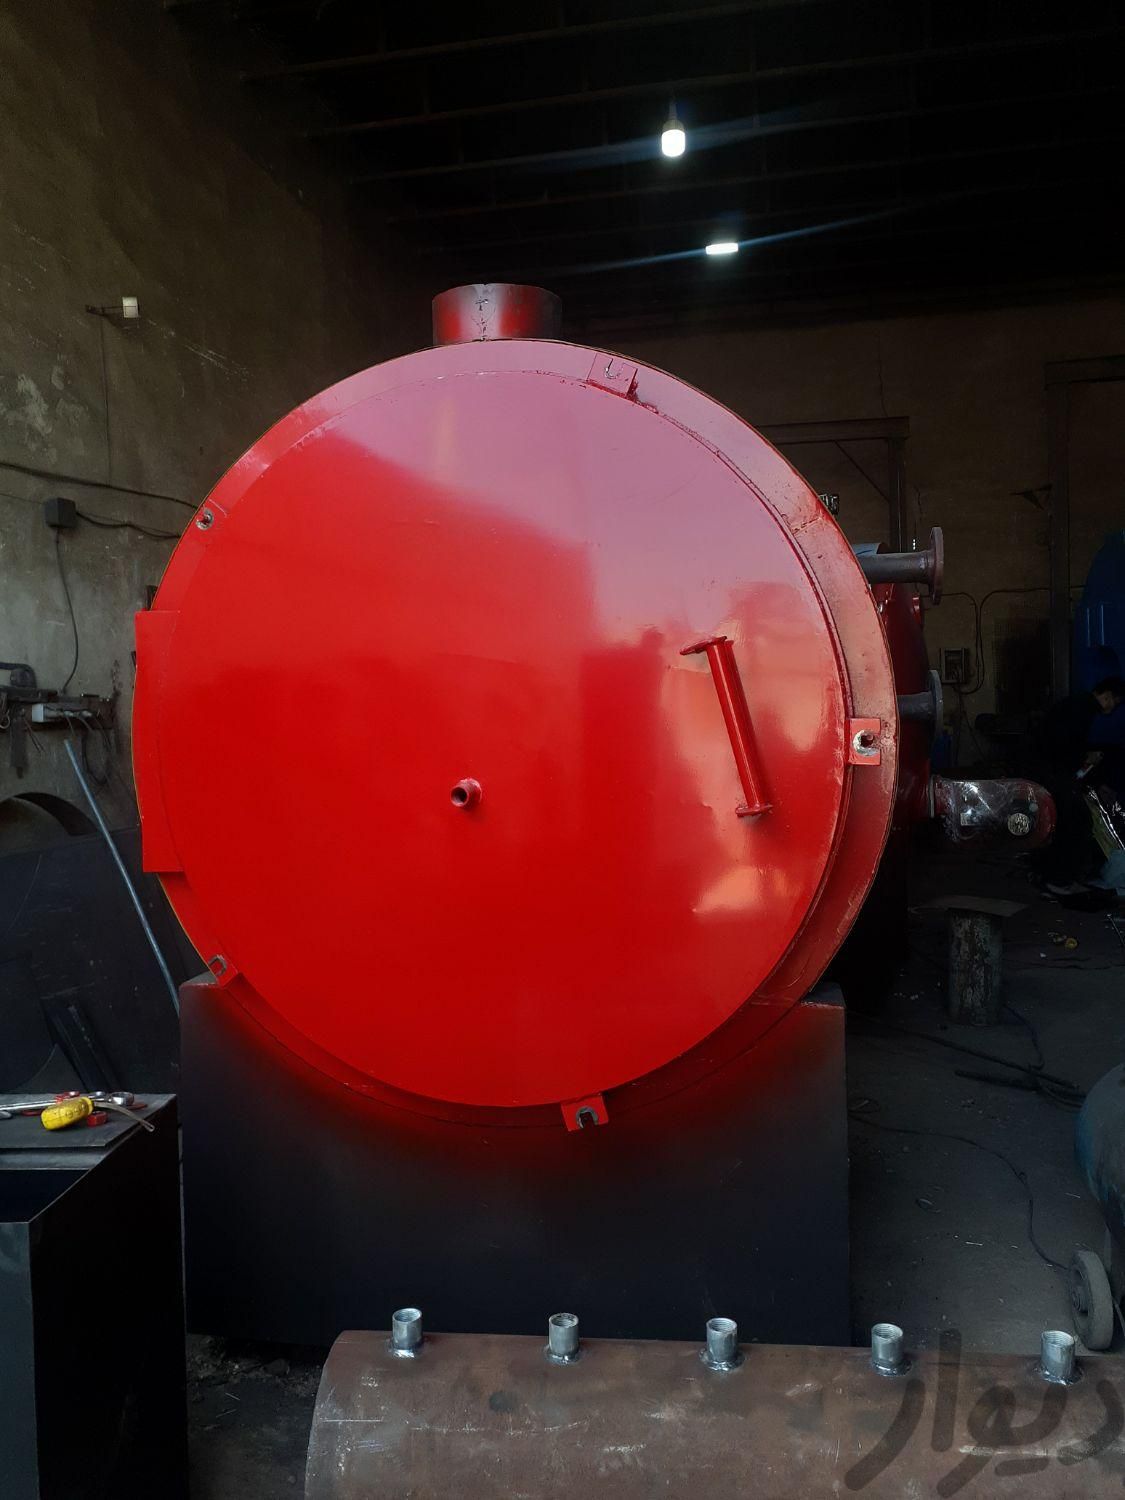 دیگ بخار دیگ روغنداغ ۳۰۰هزار کیلو کالری واقعی|ماشین‌آلات صنعتی|تهران, چیتگر|دیوار